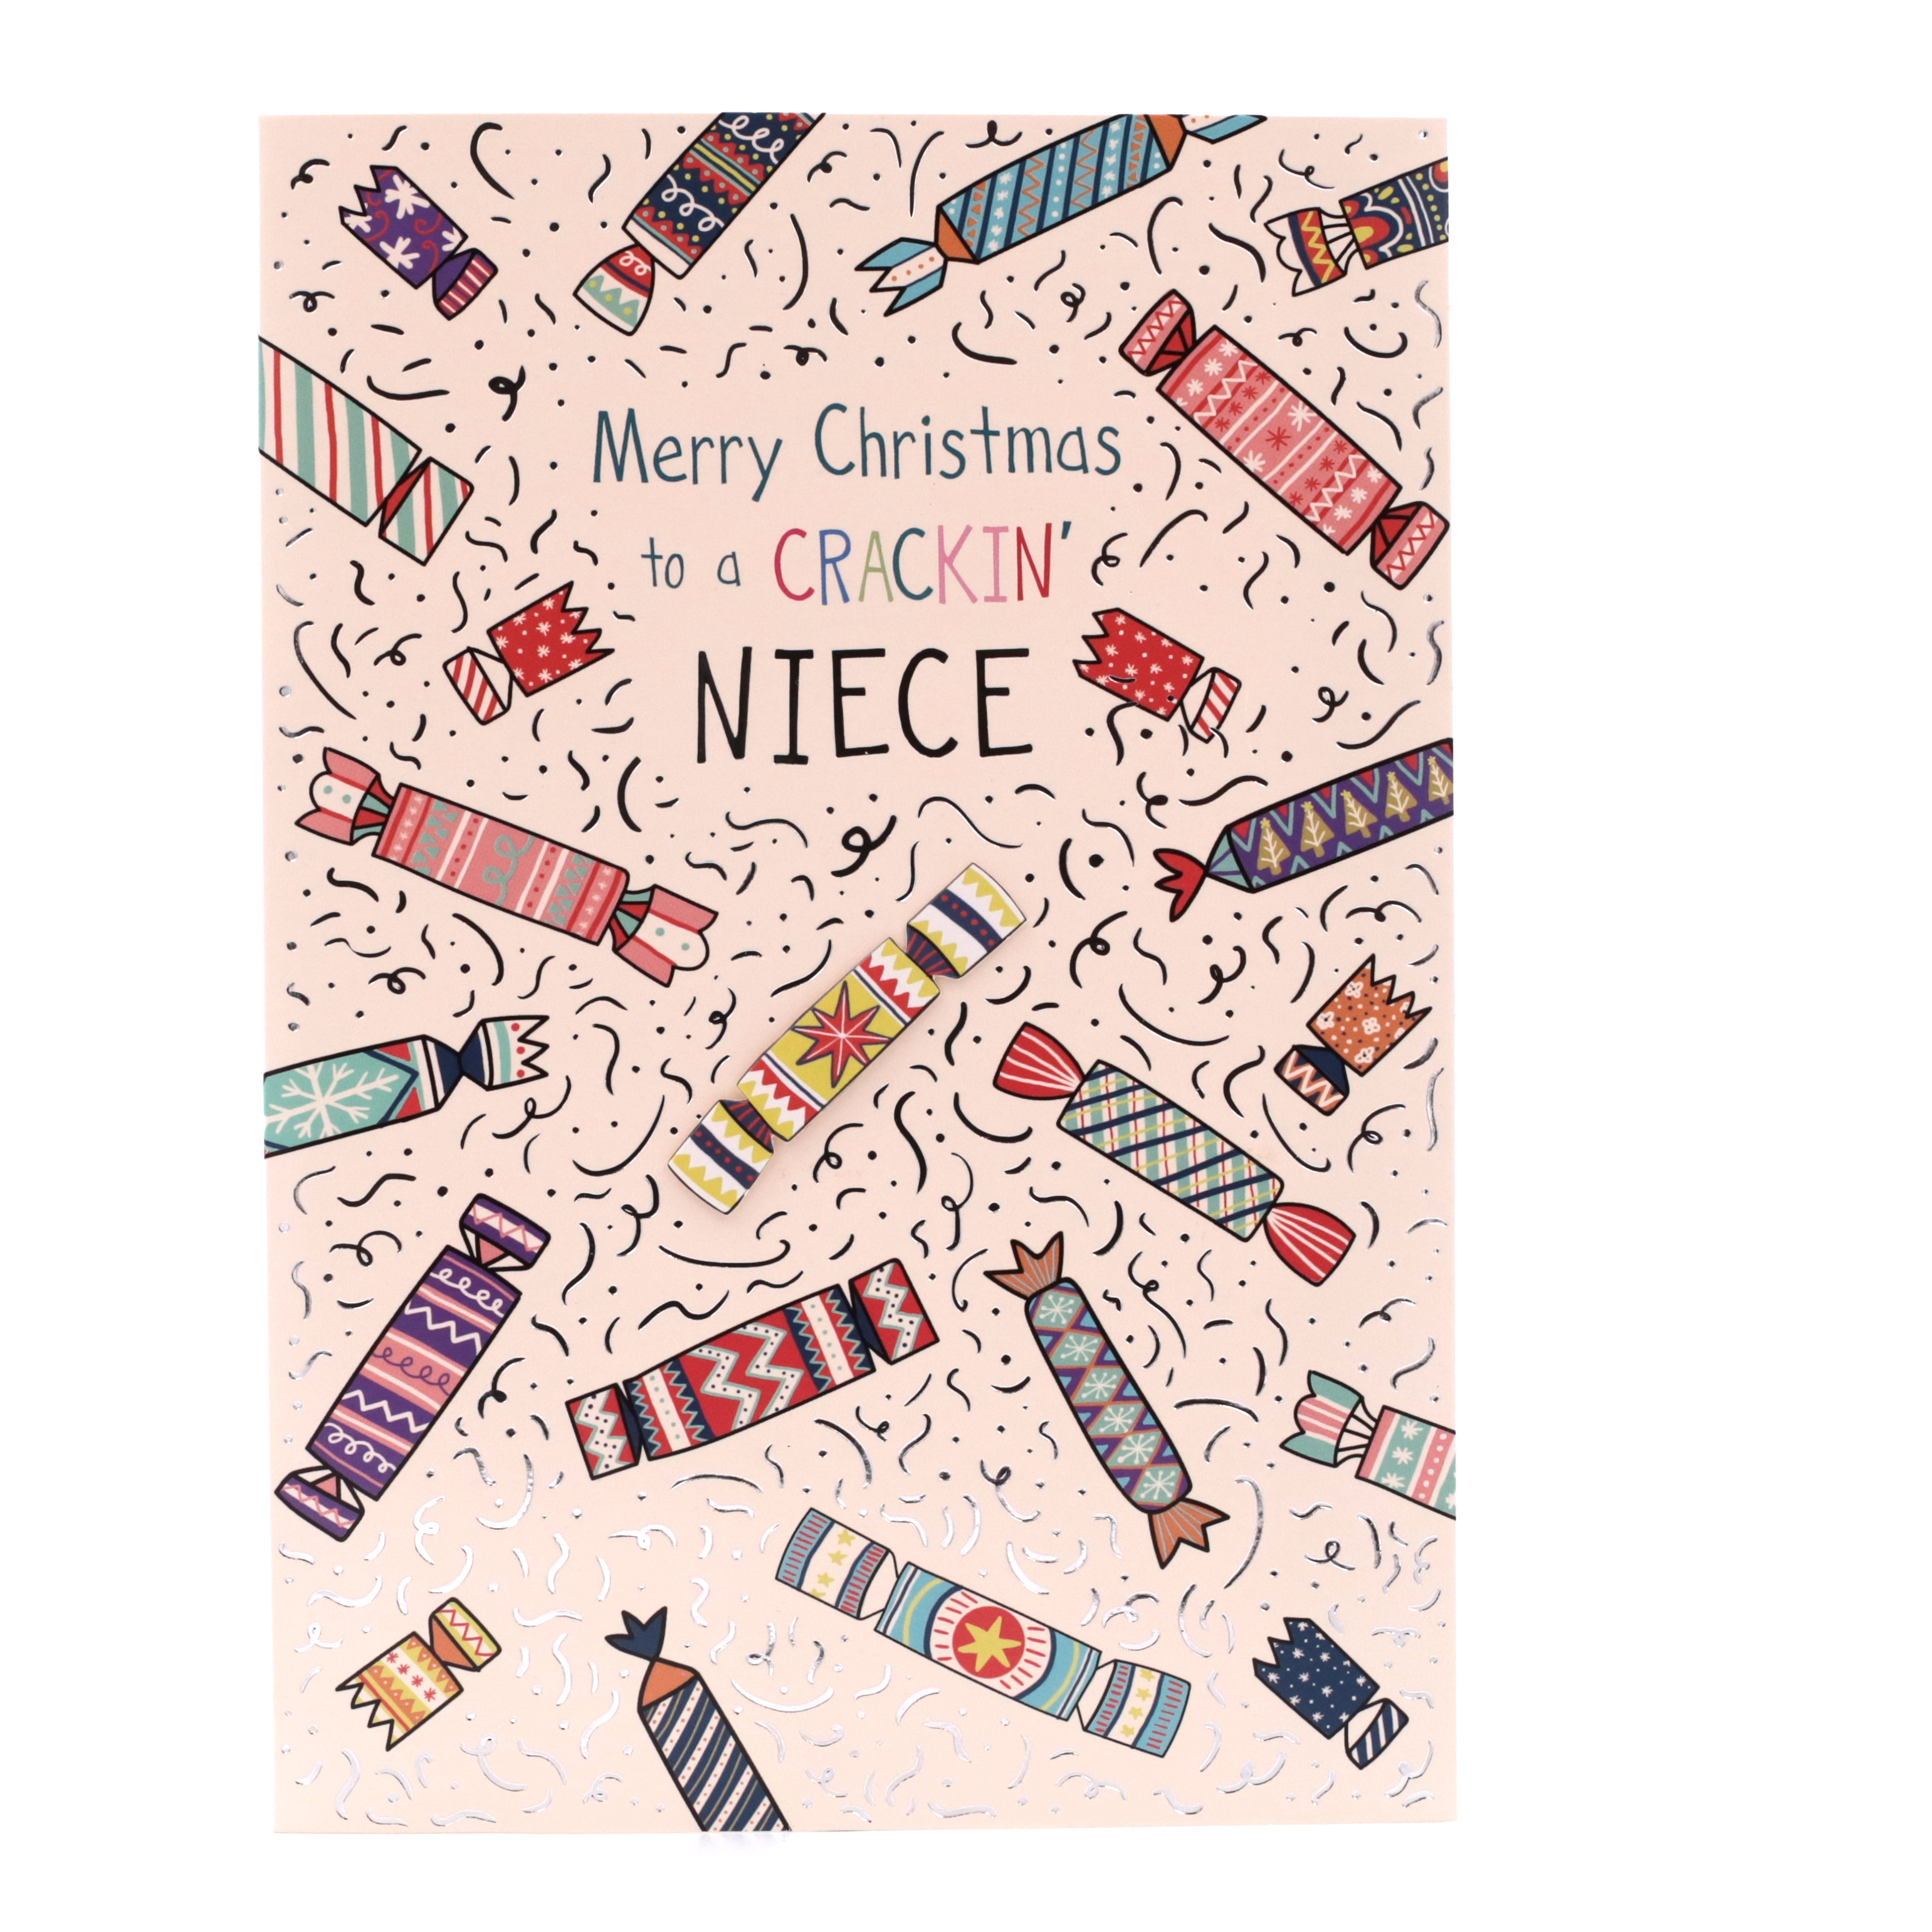 Christmas Card - Niece, Christmas Crackers